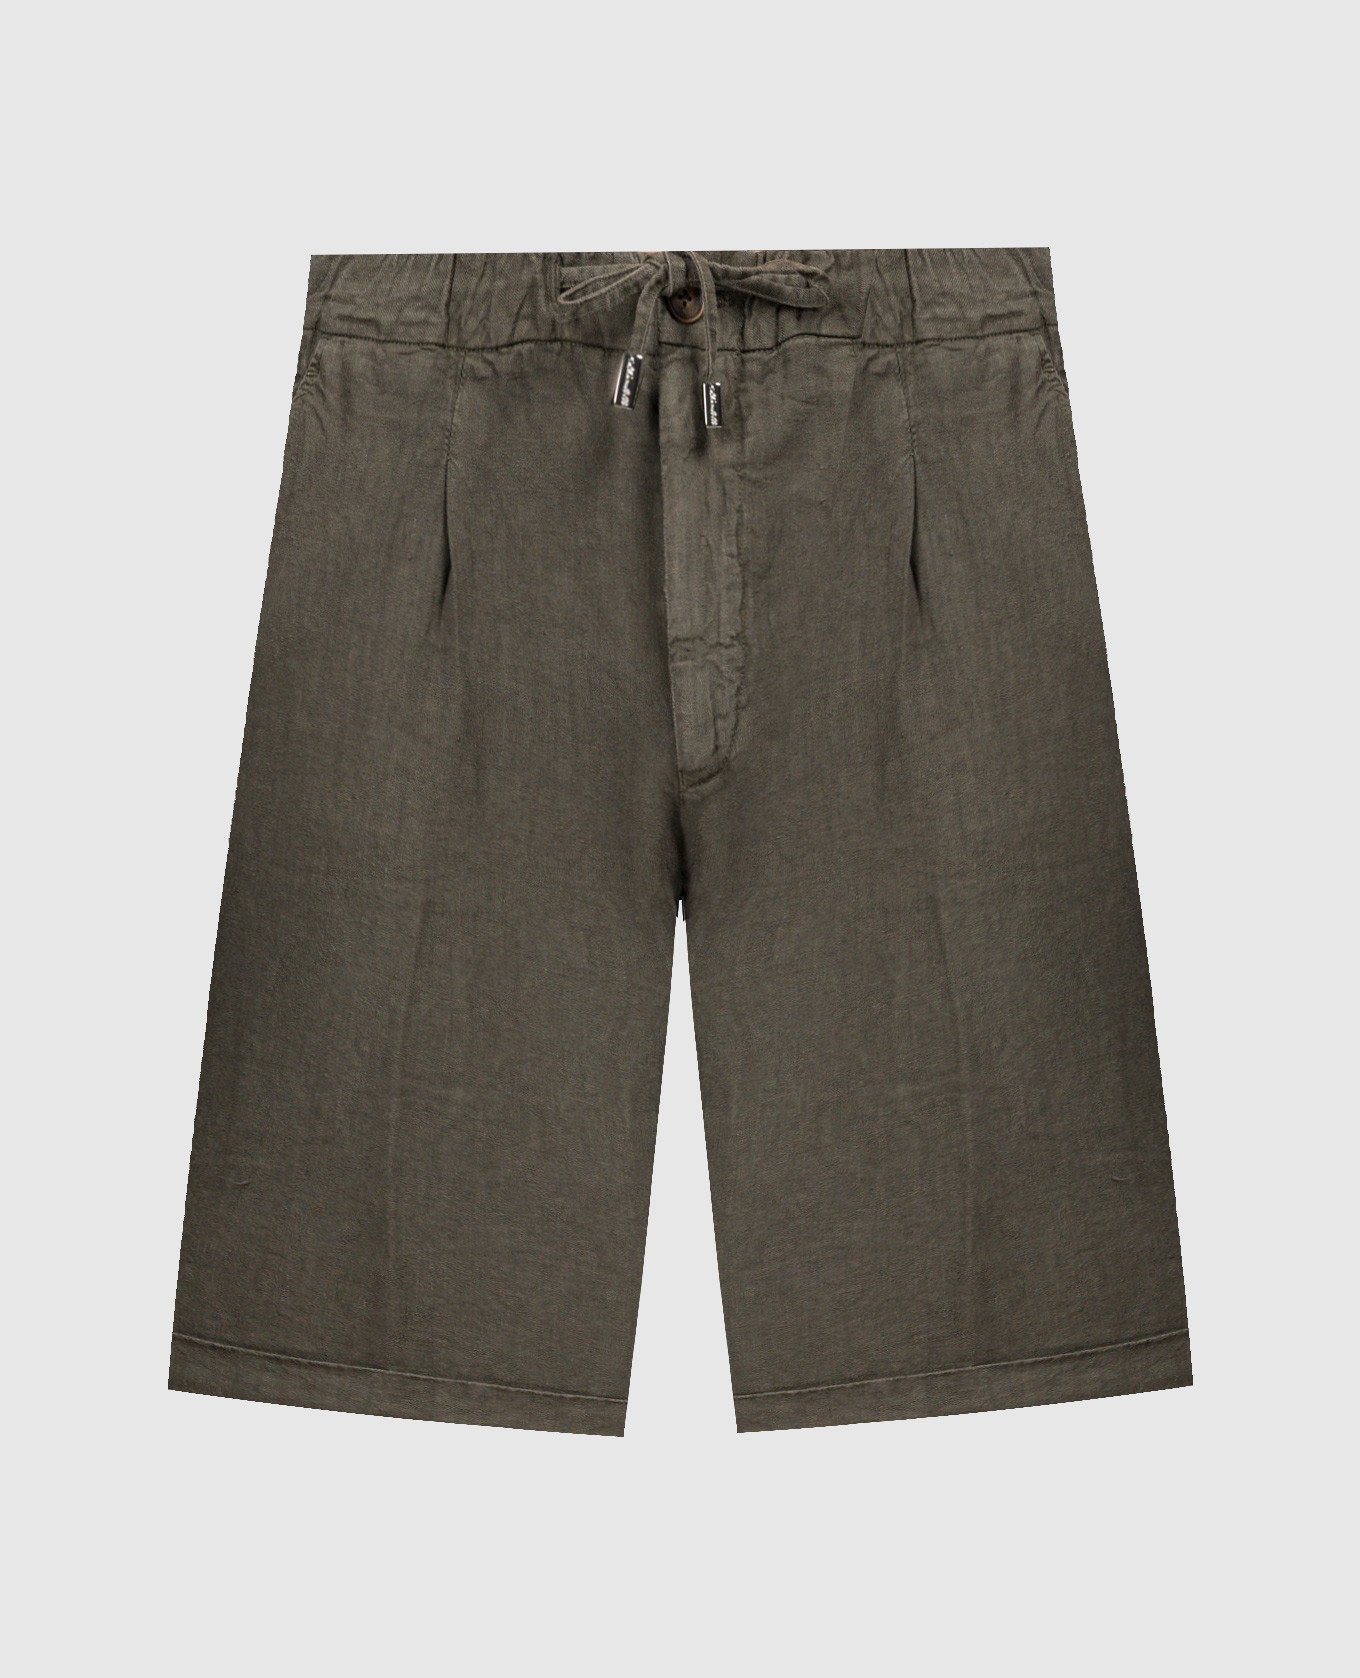 Khaki linen shorts